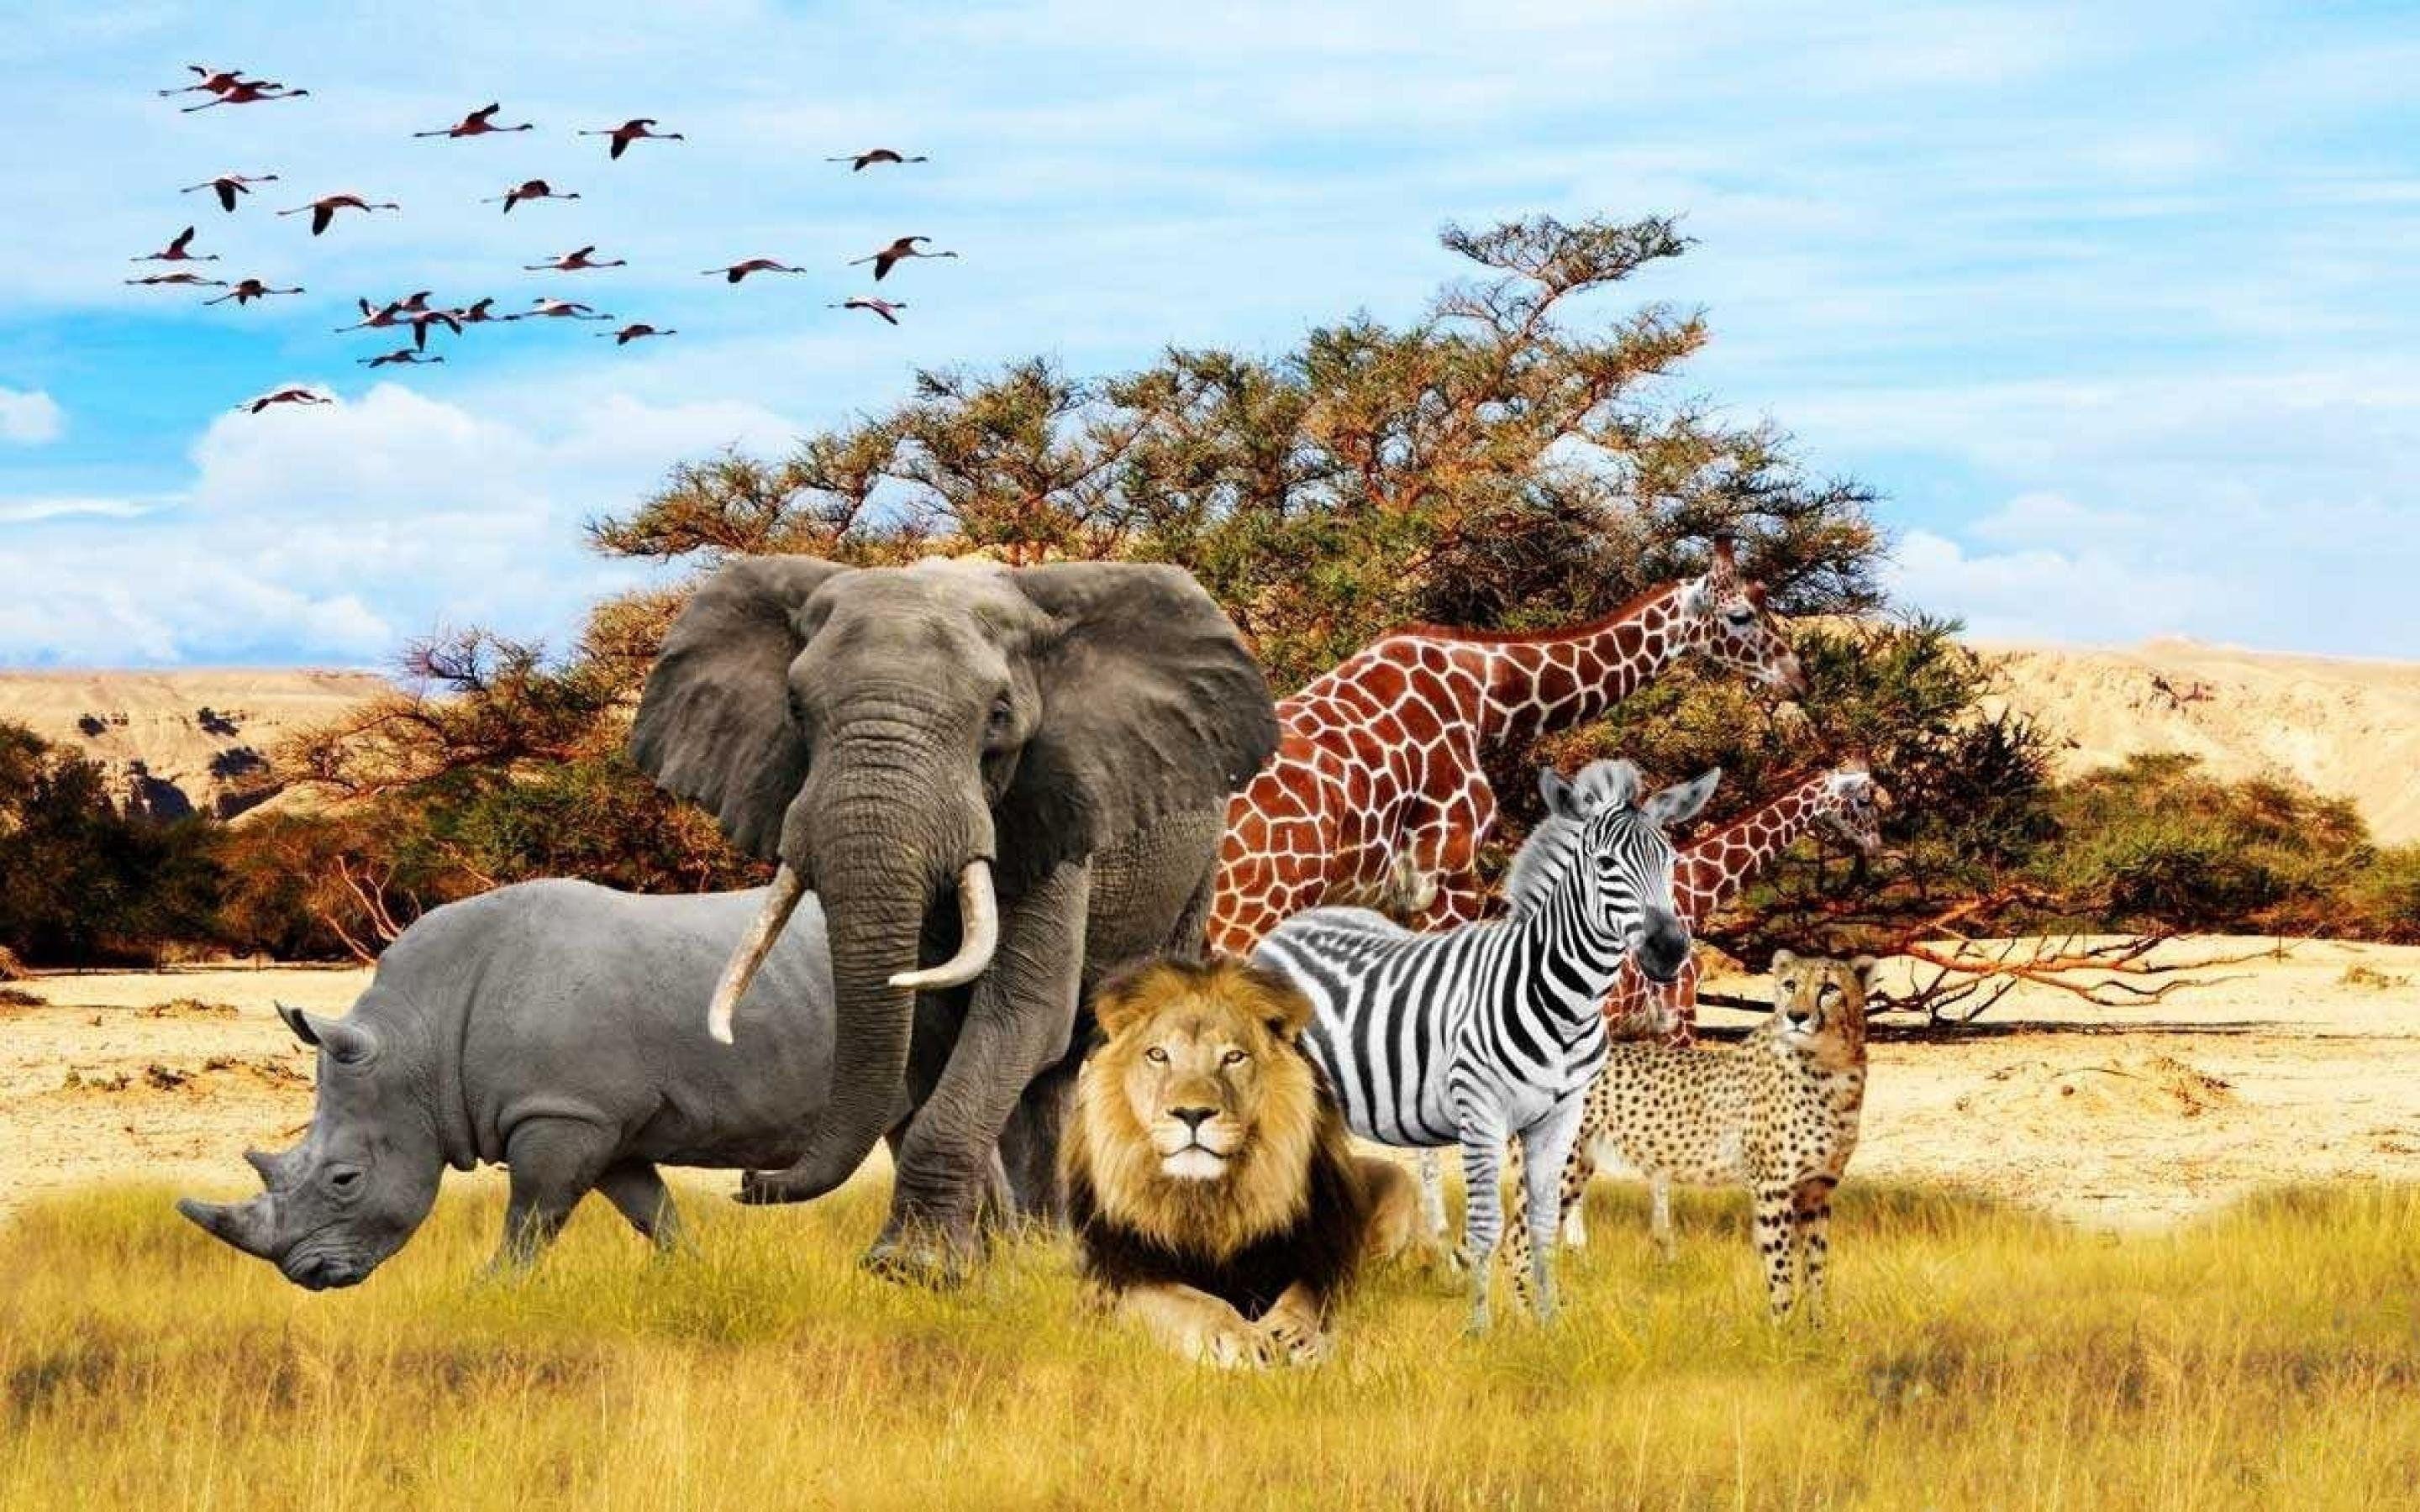 best safari backgrounds